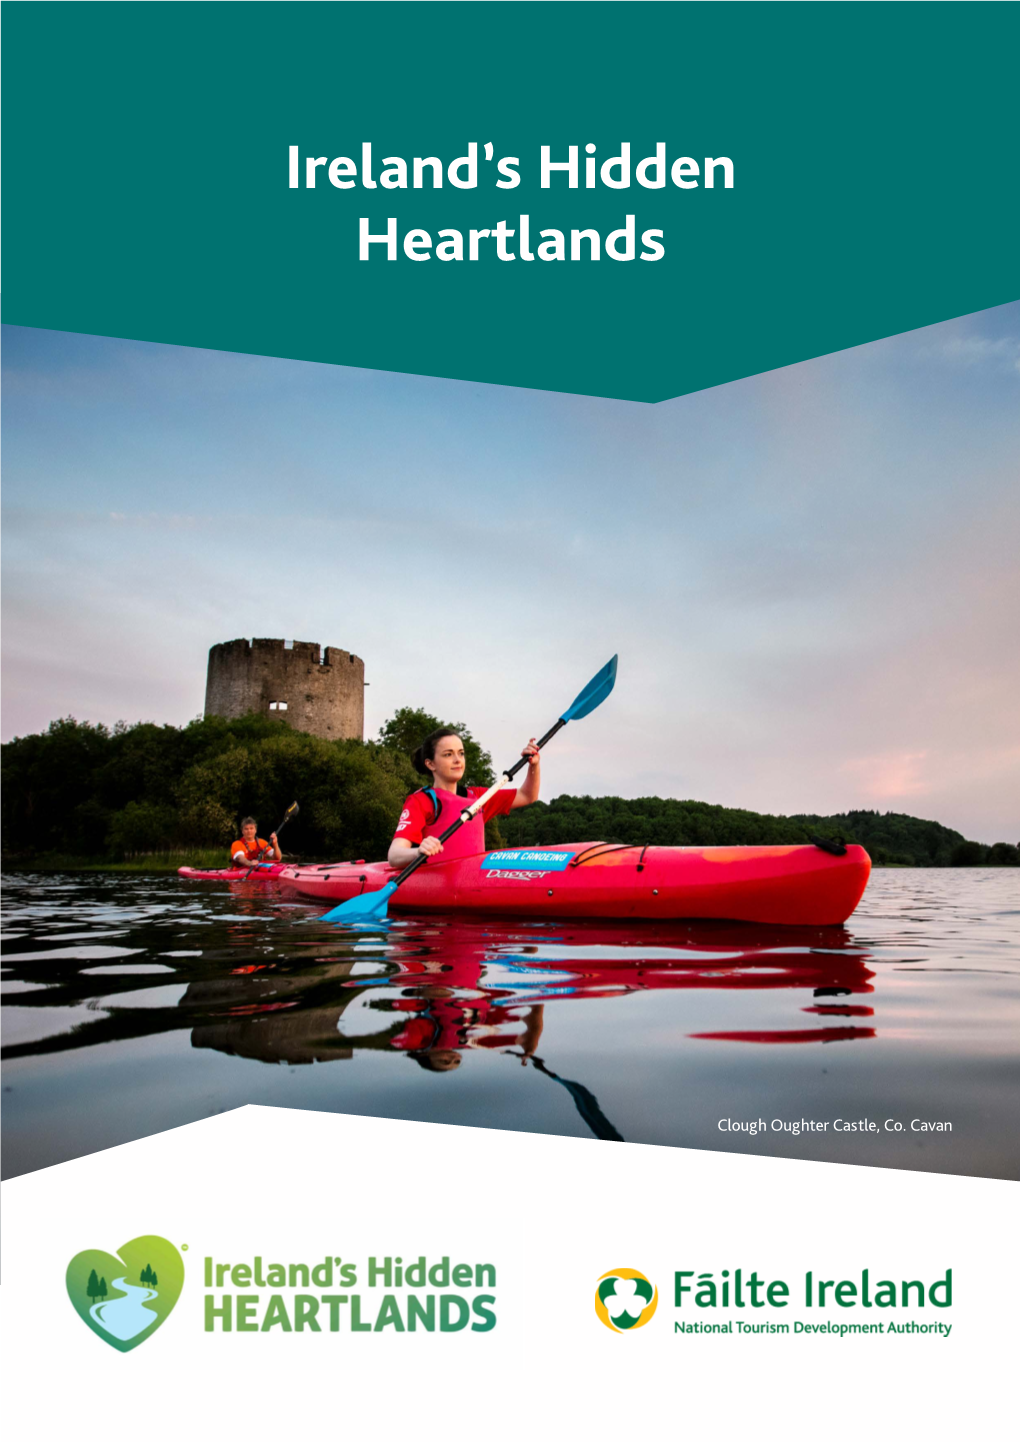 Download the Ireland's Hidden Heartlands Itinerary